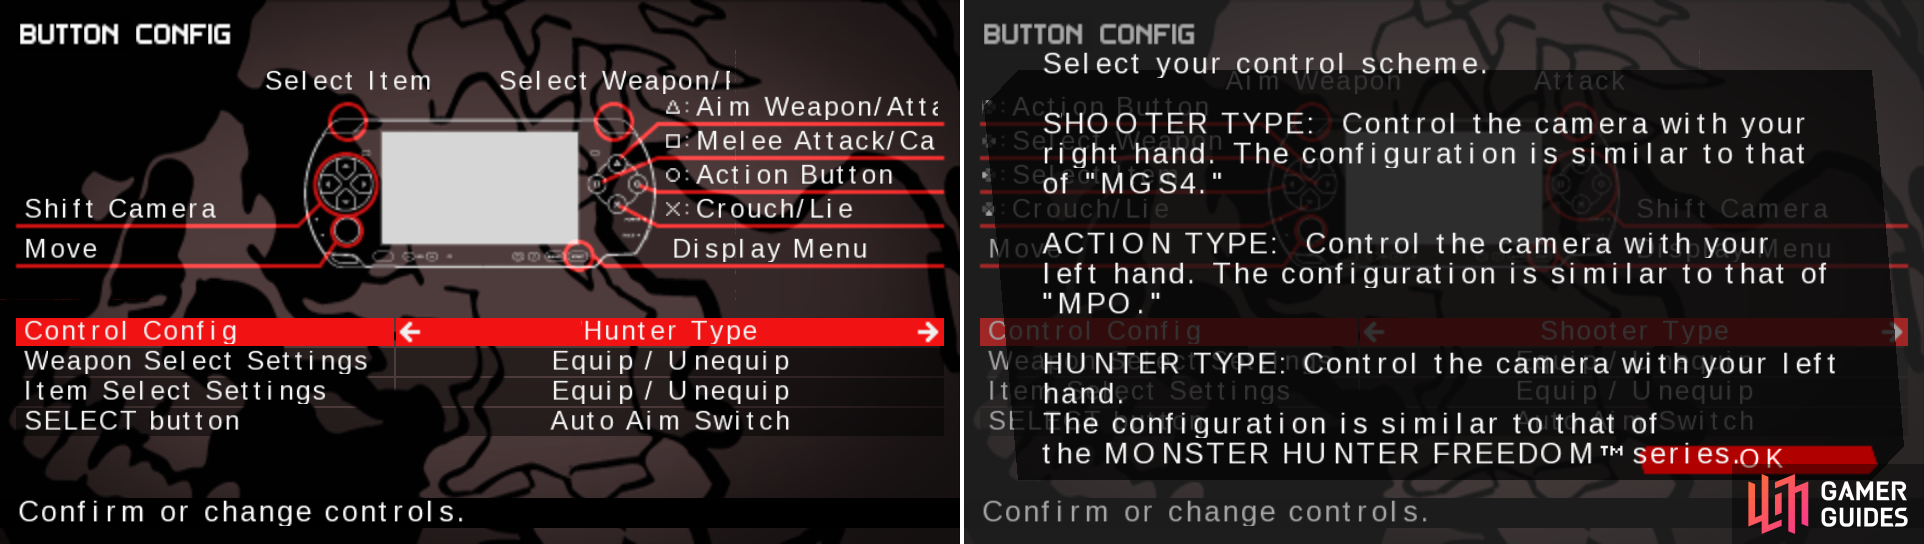 Habubu dienen Jet Shooter-type - Controls - Introduction | Metal Gear Solid: Peace Walker |  Gamer Guides®